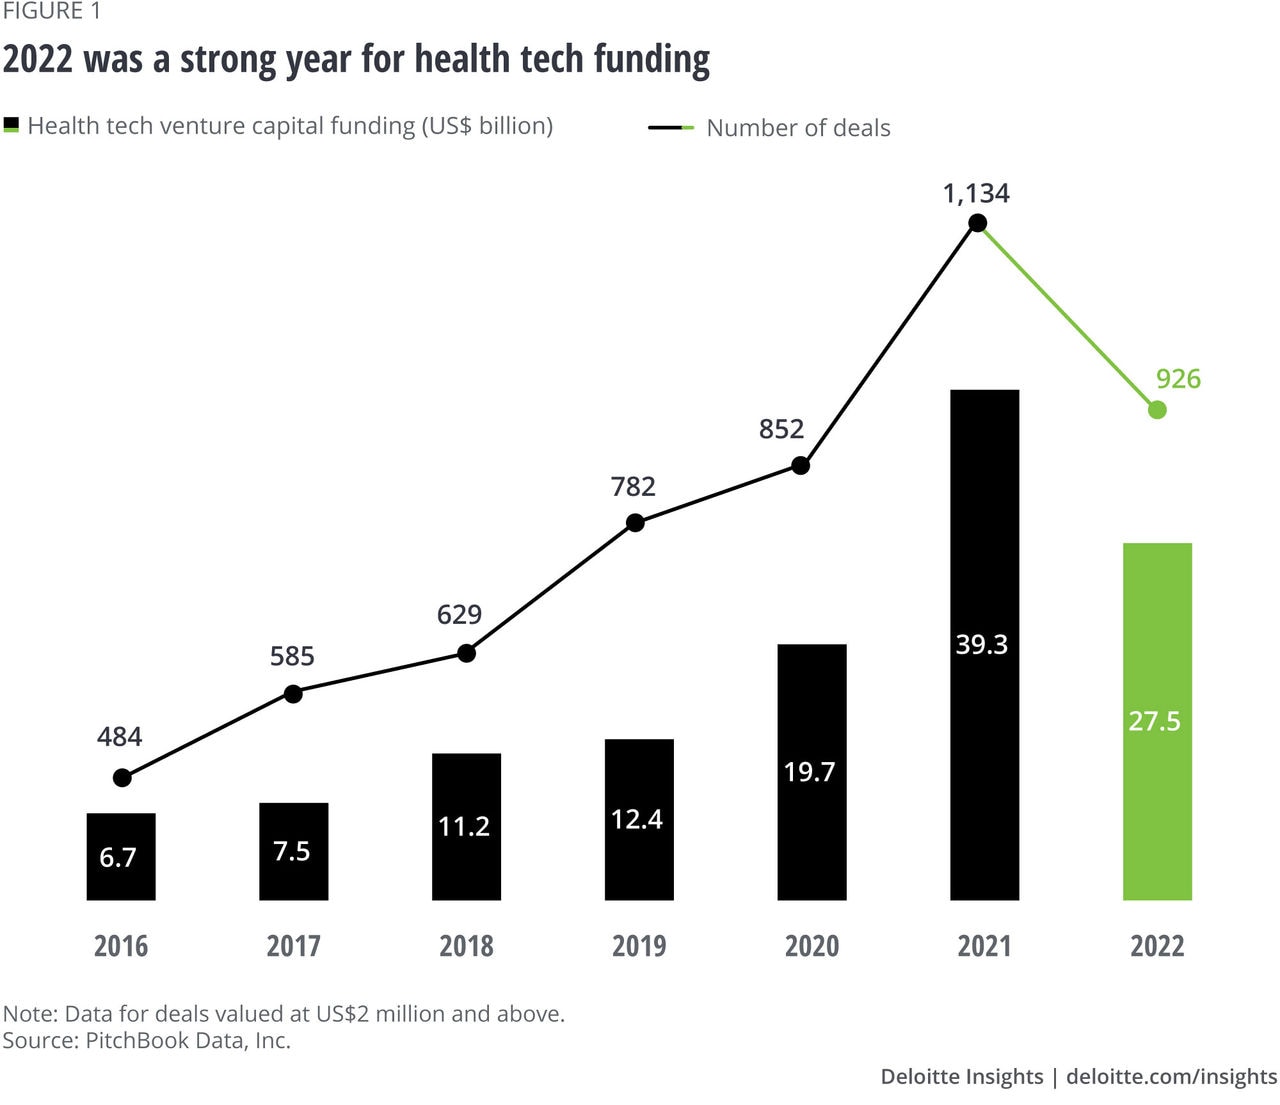 Figure 1: Health tech venture capital funding 2016-2022